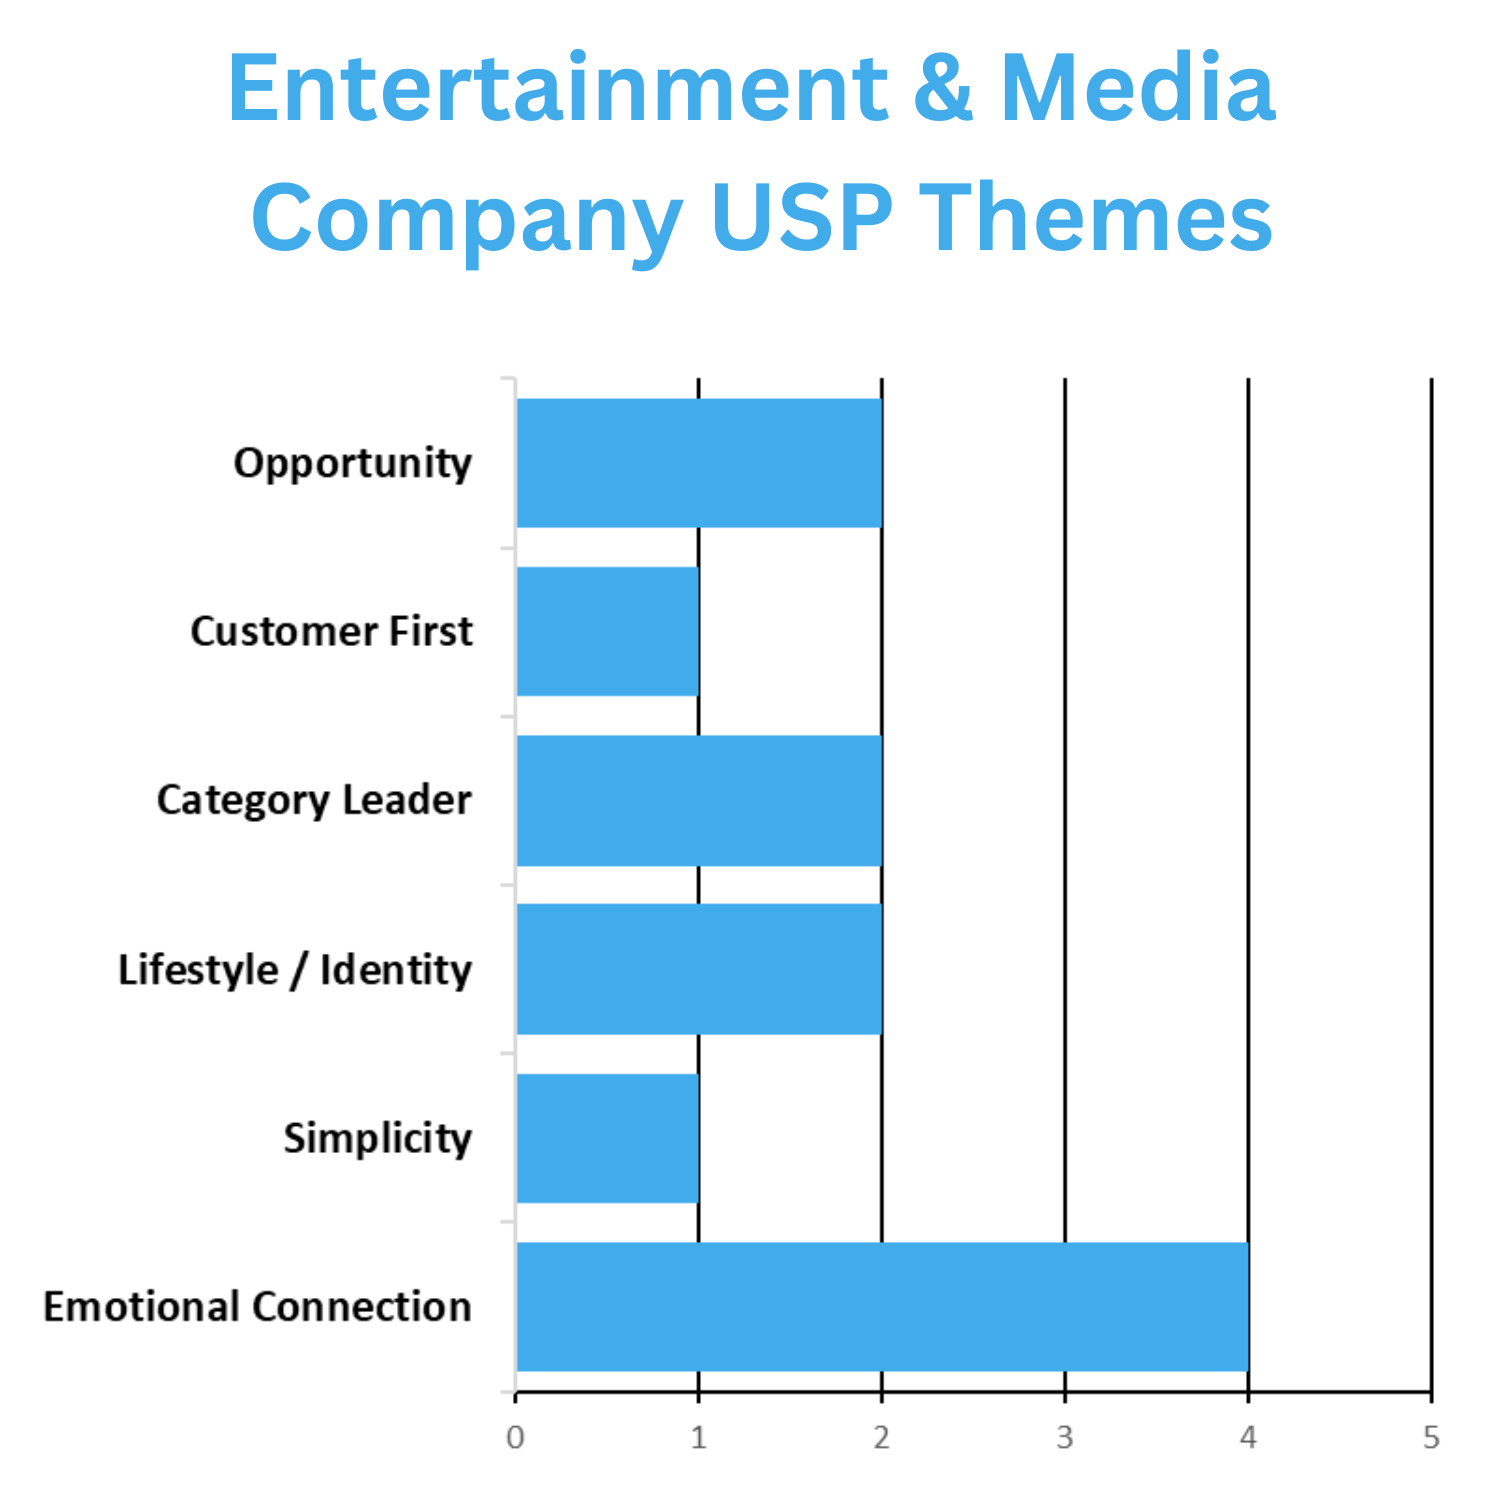 Entertainment and Media Company USP Themes